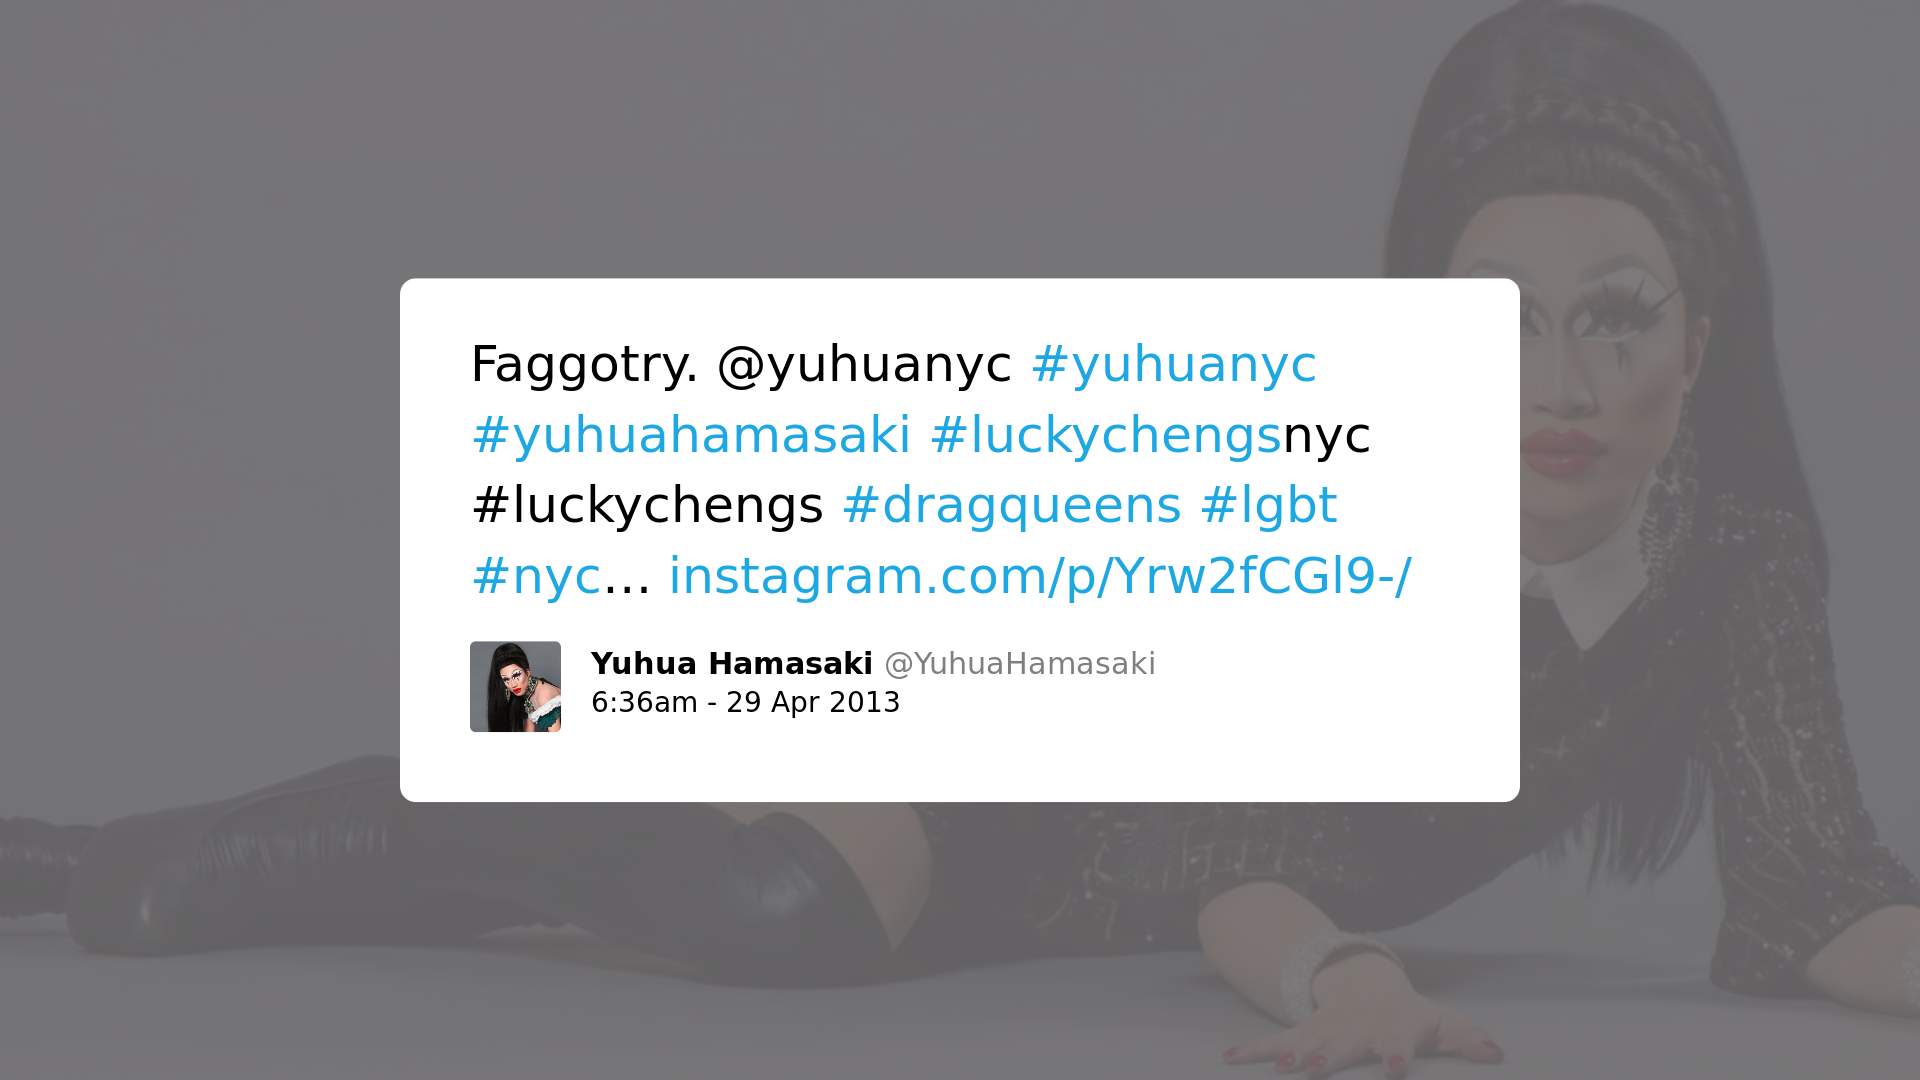 Print screen de postagem de Yuhua Hamasaki com o texto: Fagottry. @yuhuanyc #yuhuanyc #yuhuahamasaki #luckychengsnyc #luckychengs #dragqueens #lgbt #nyc. 